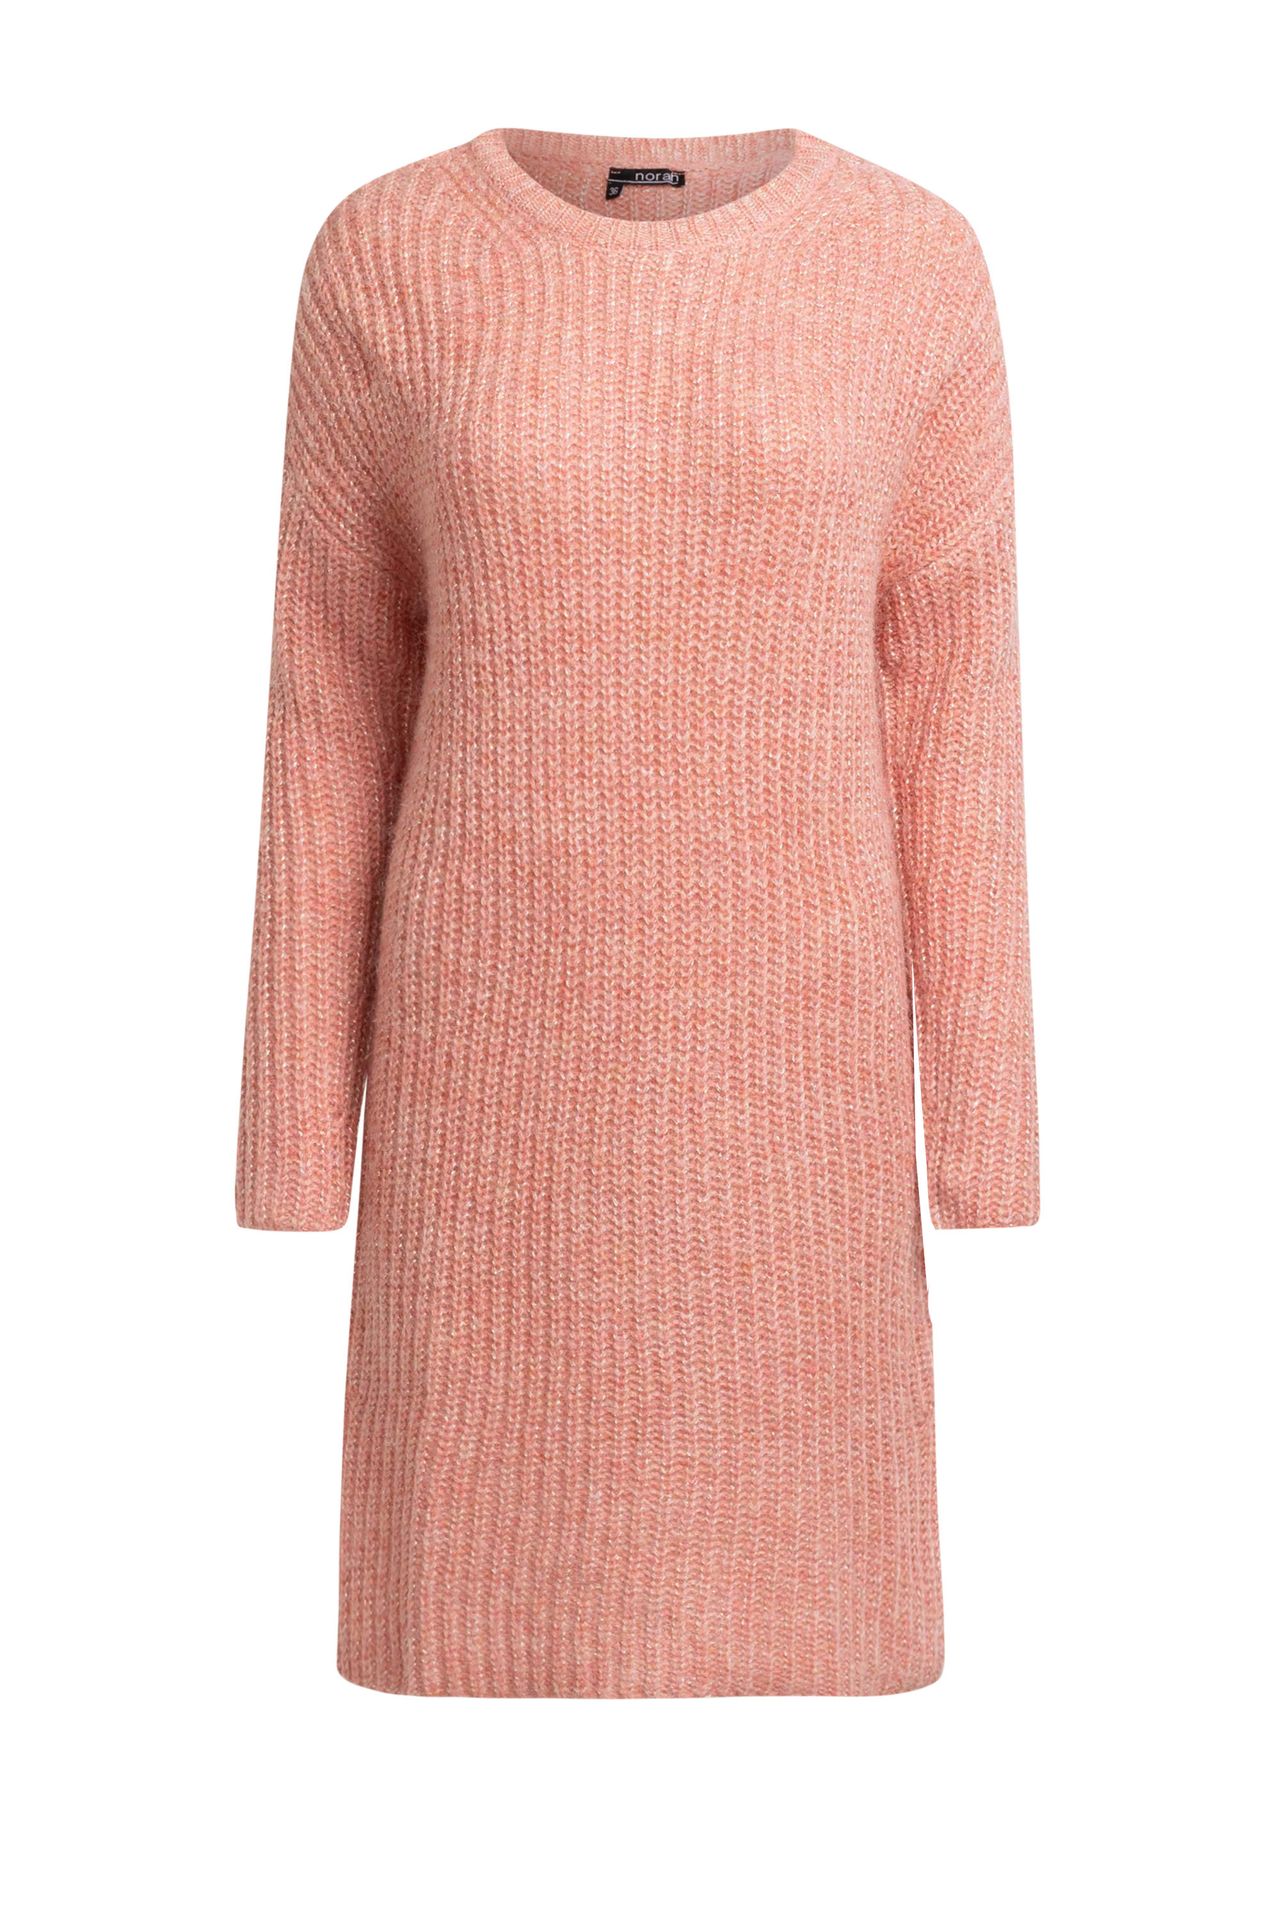  Gebreide jurk roze blush 210585-905-42